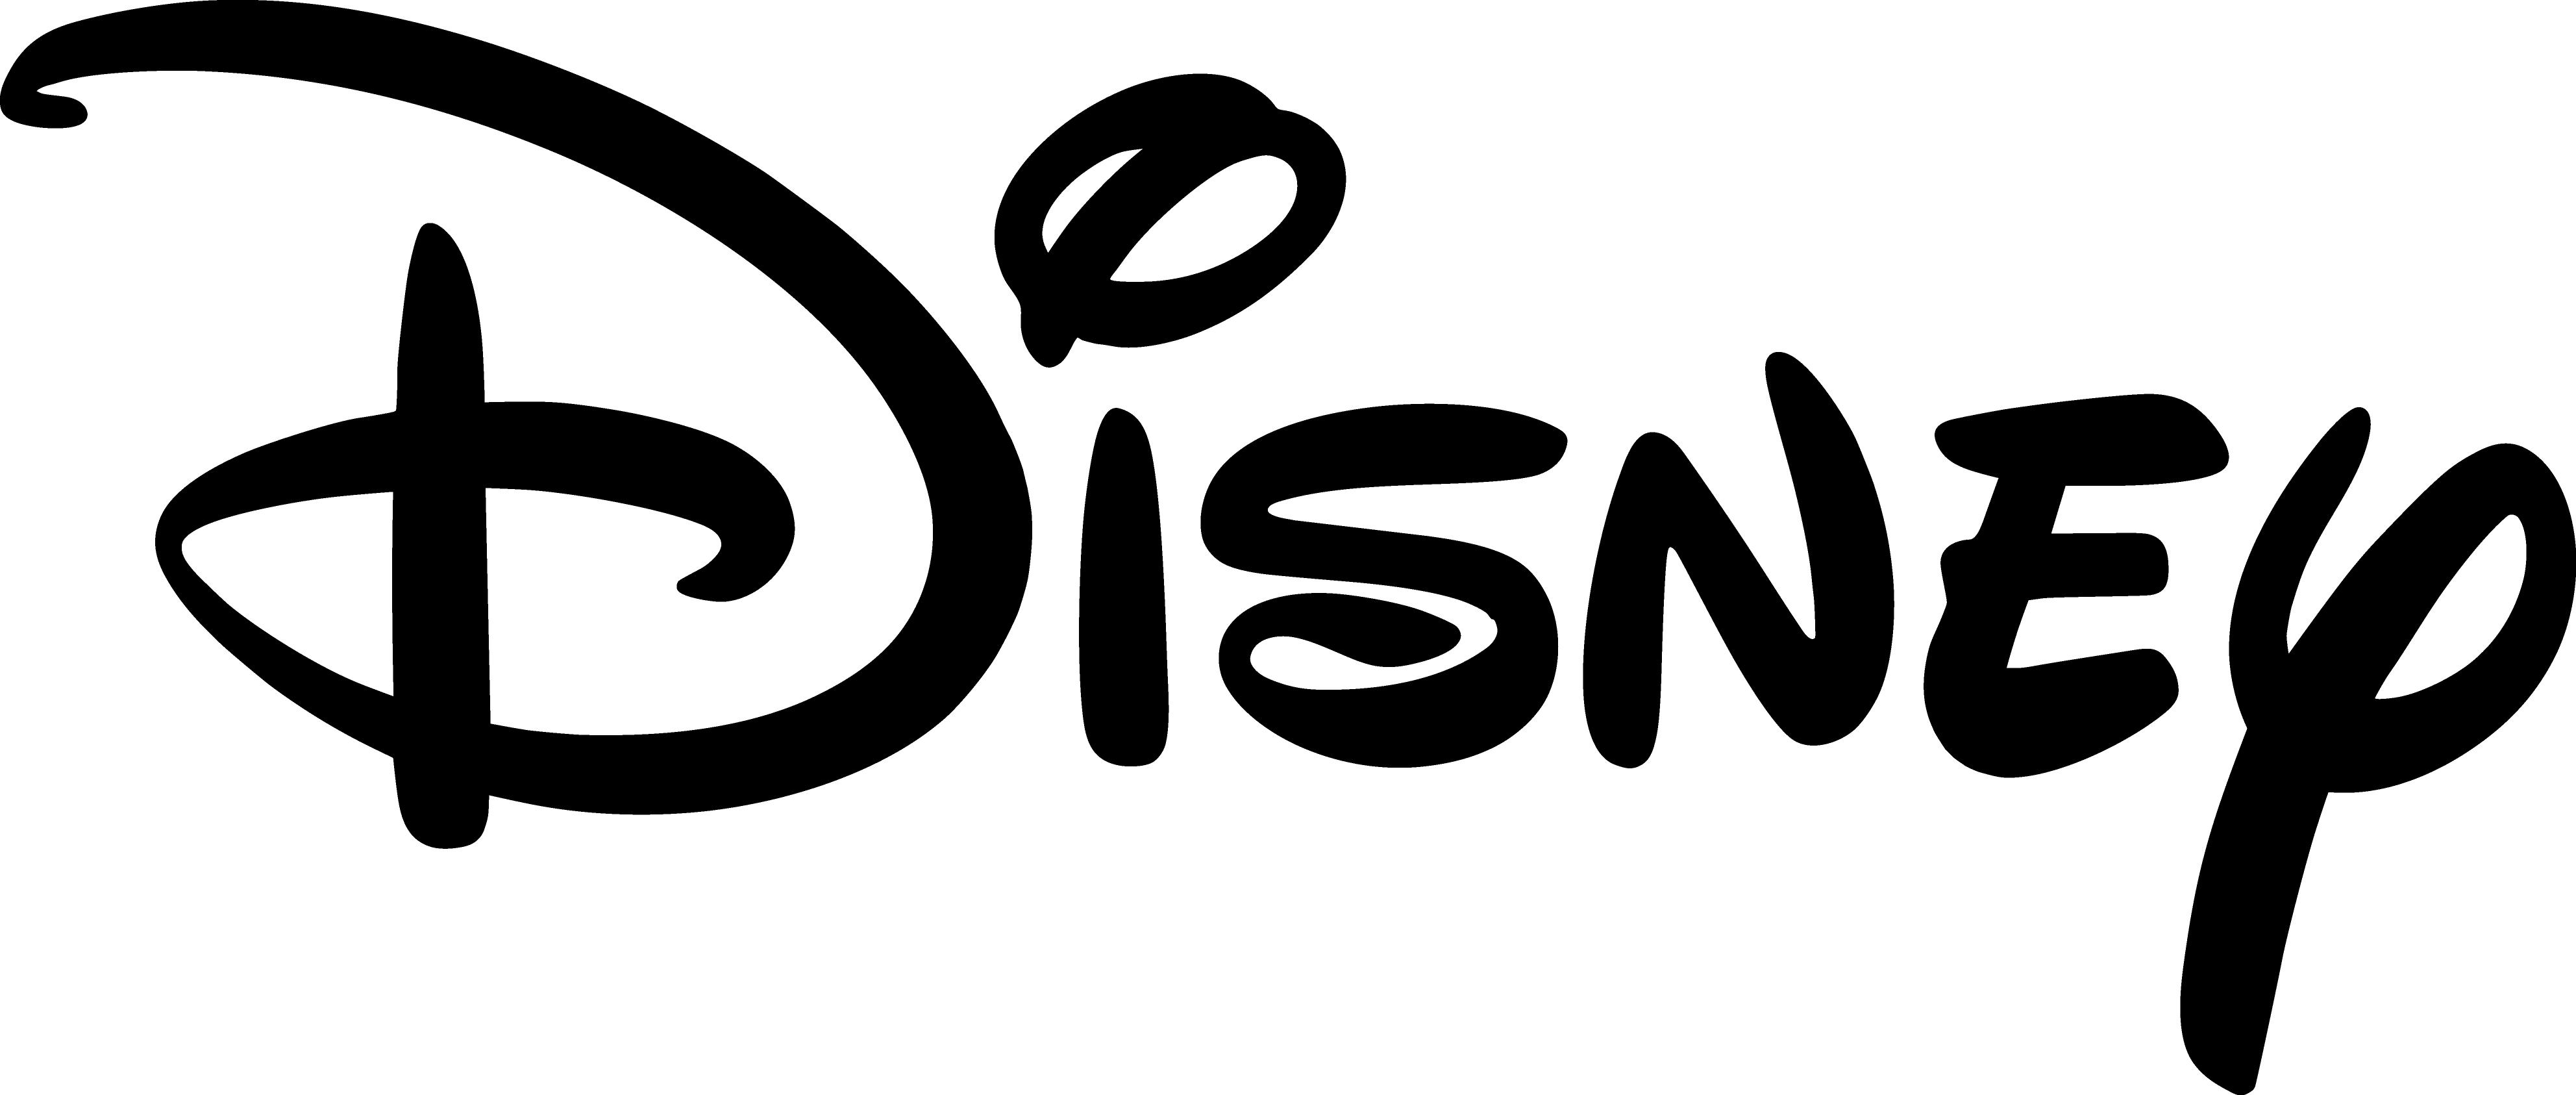 Smash Up: Disney – The Op Games